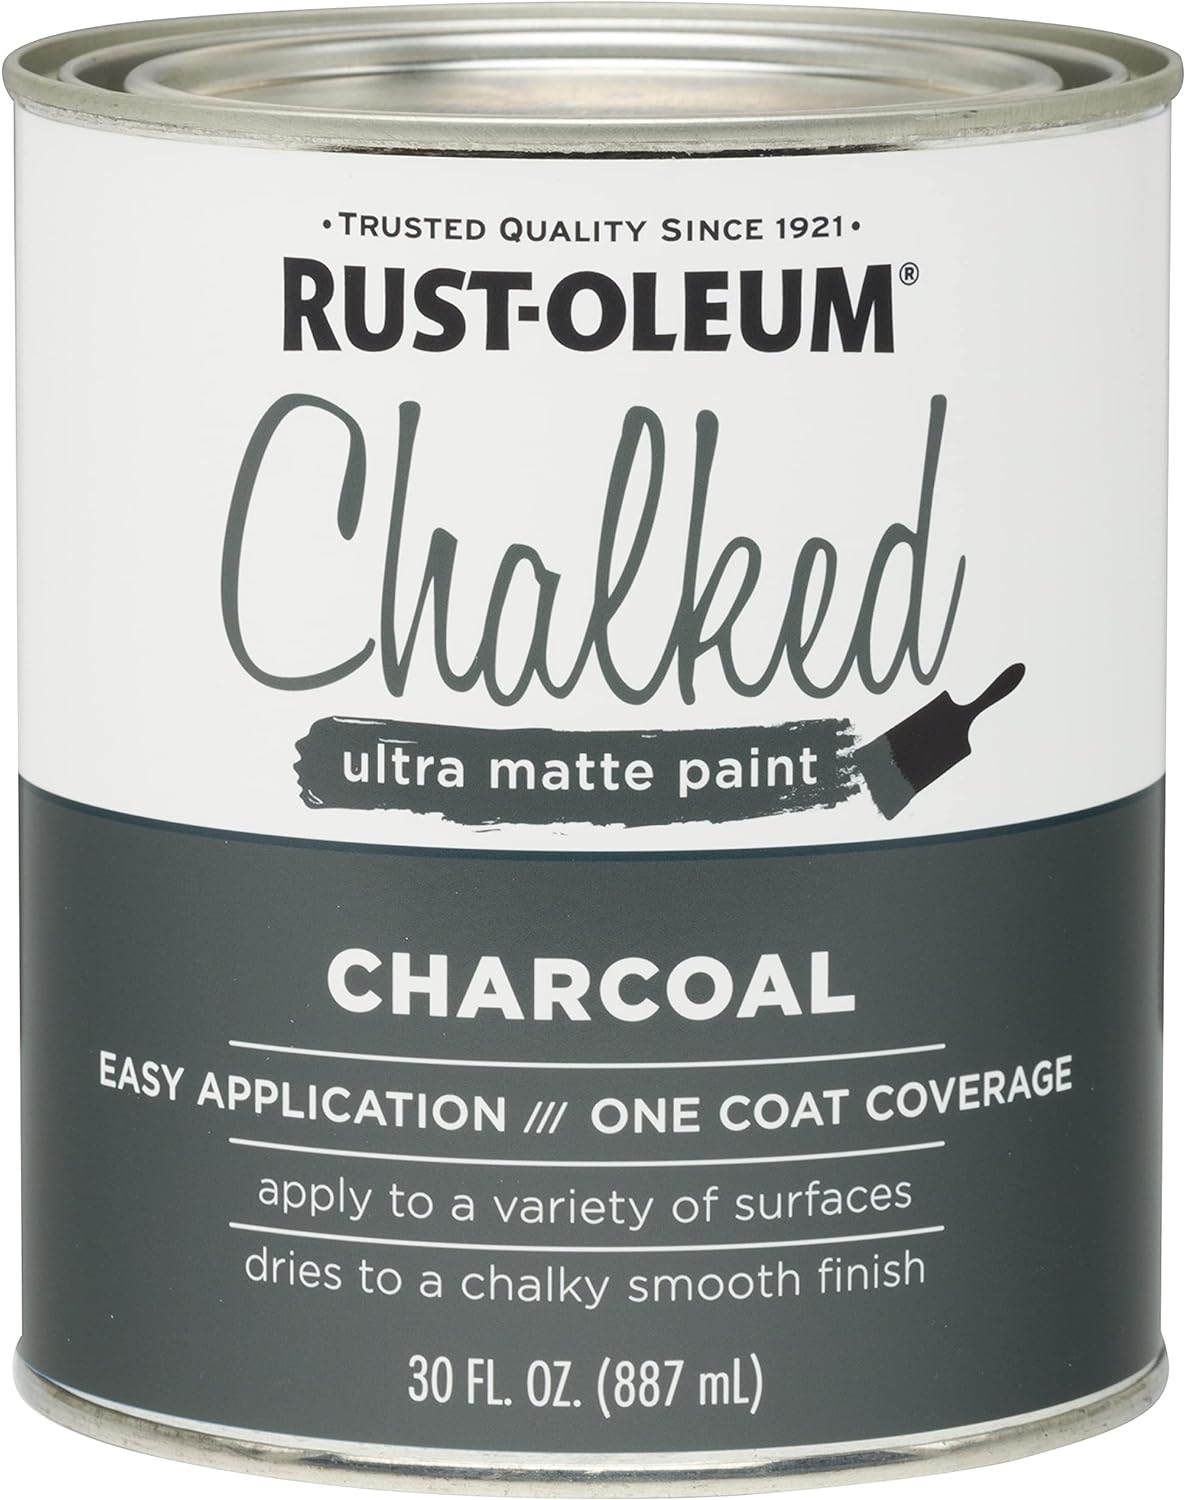 Rust-Oleum Chalked Paint